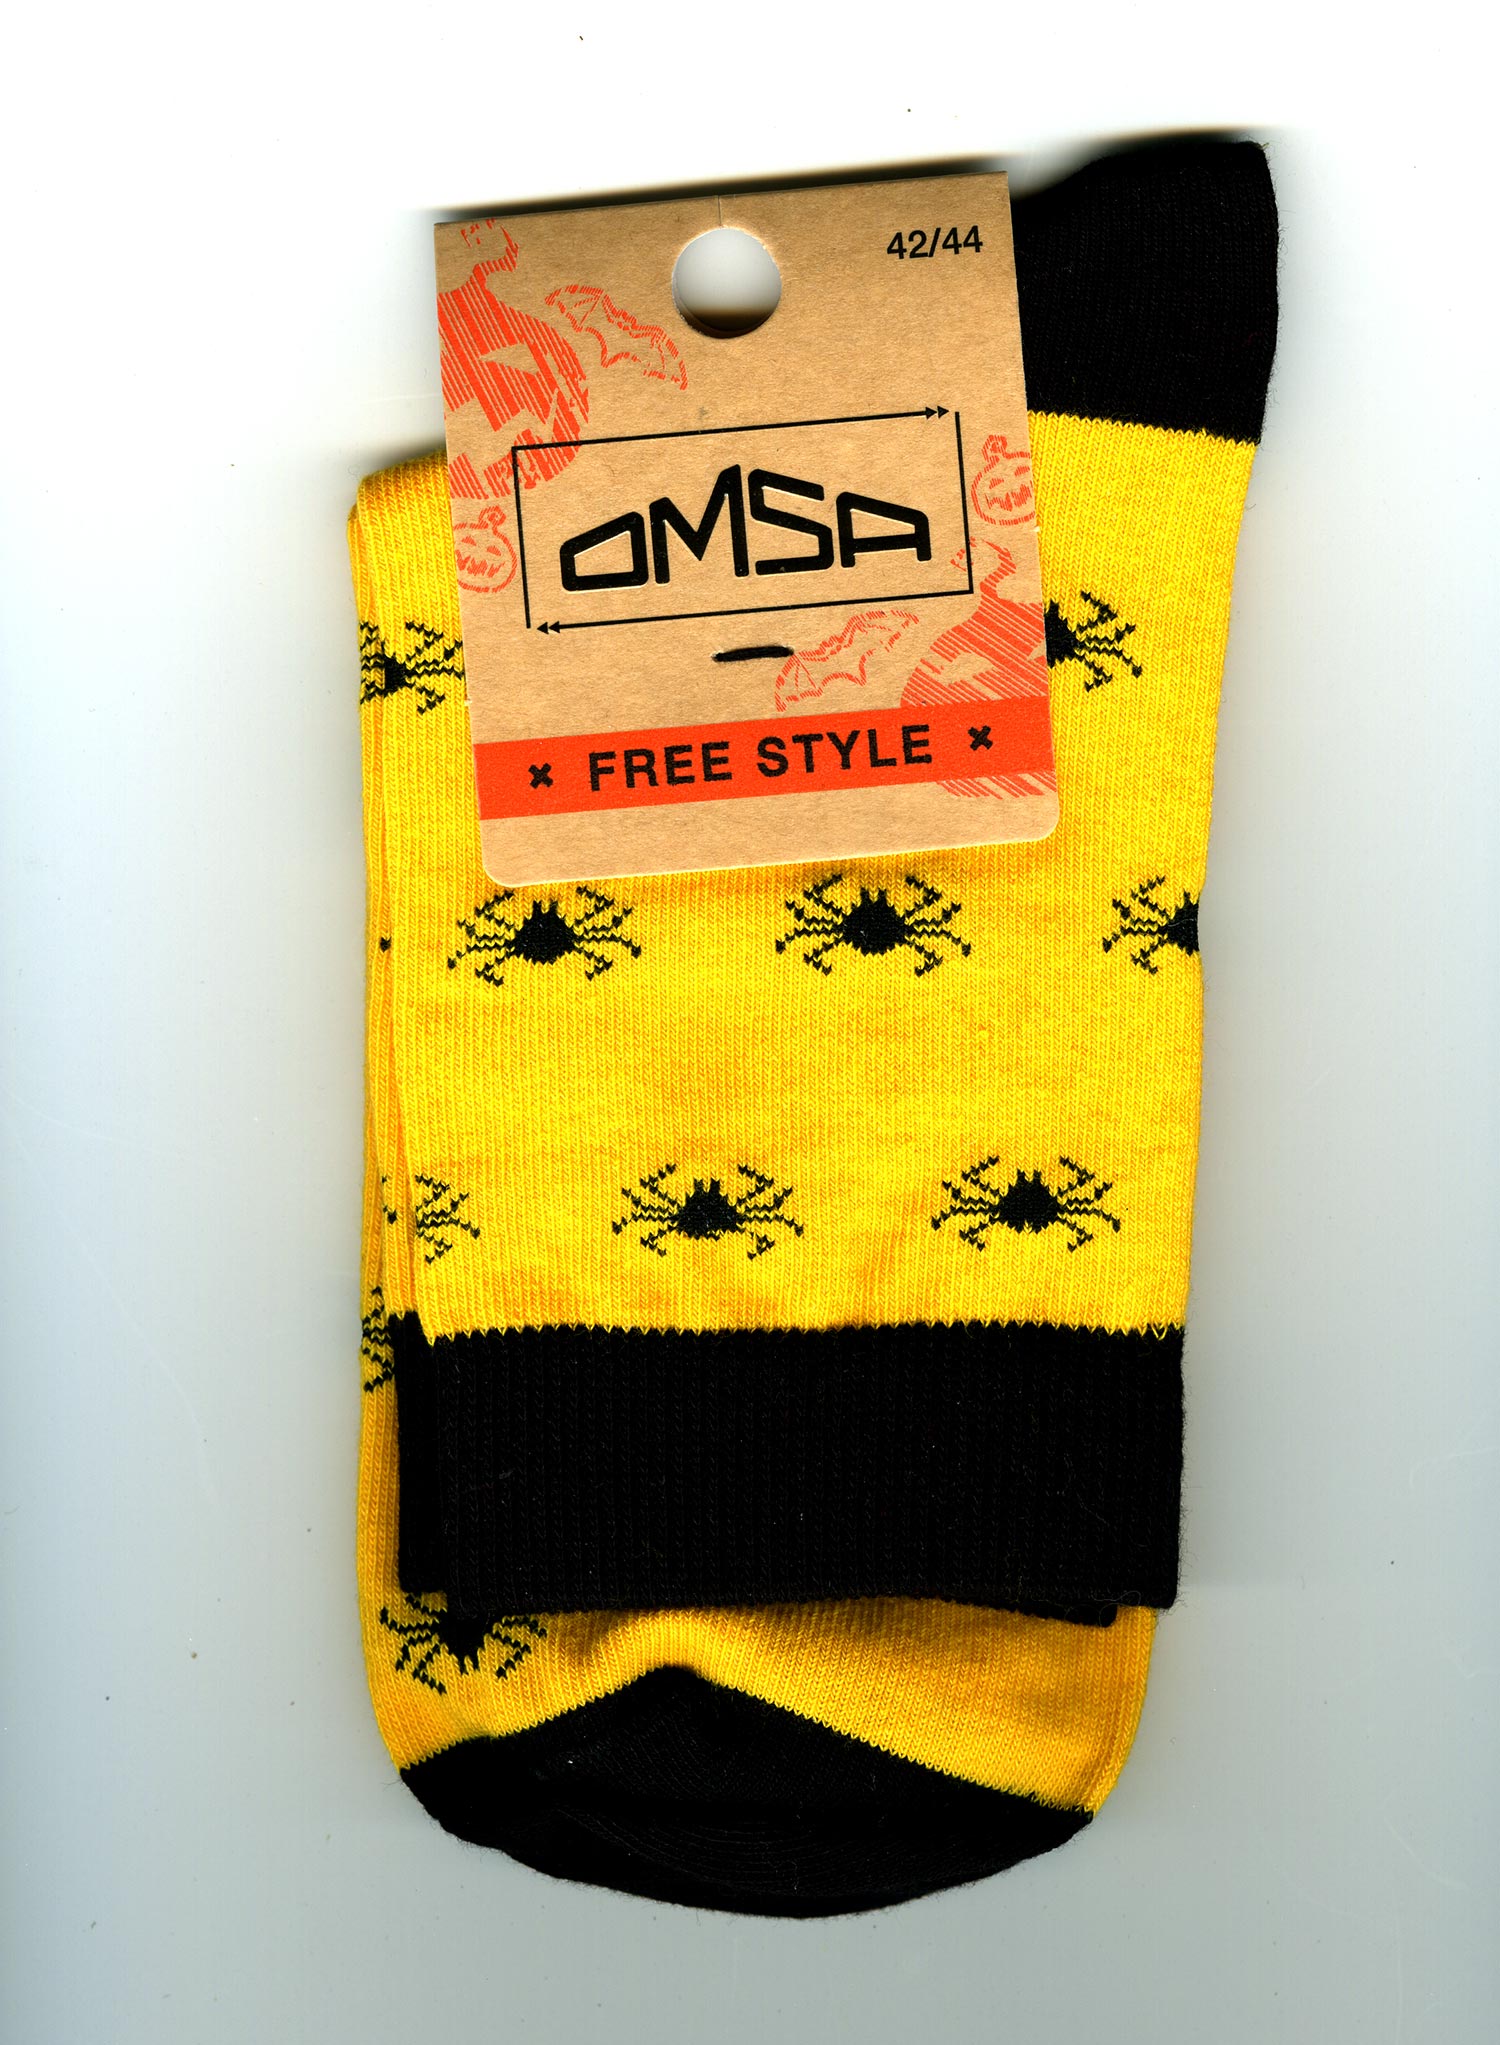 Носки с пауками OMSA Free Style 608. Изображение: ©bracatuS.com